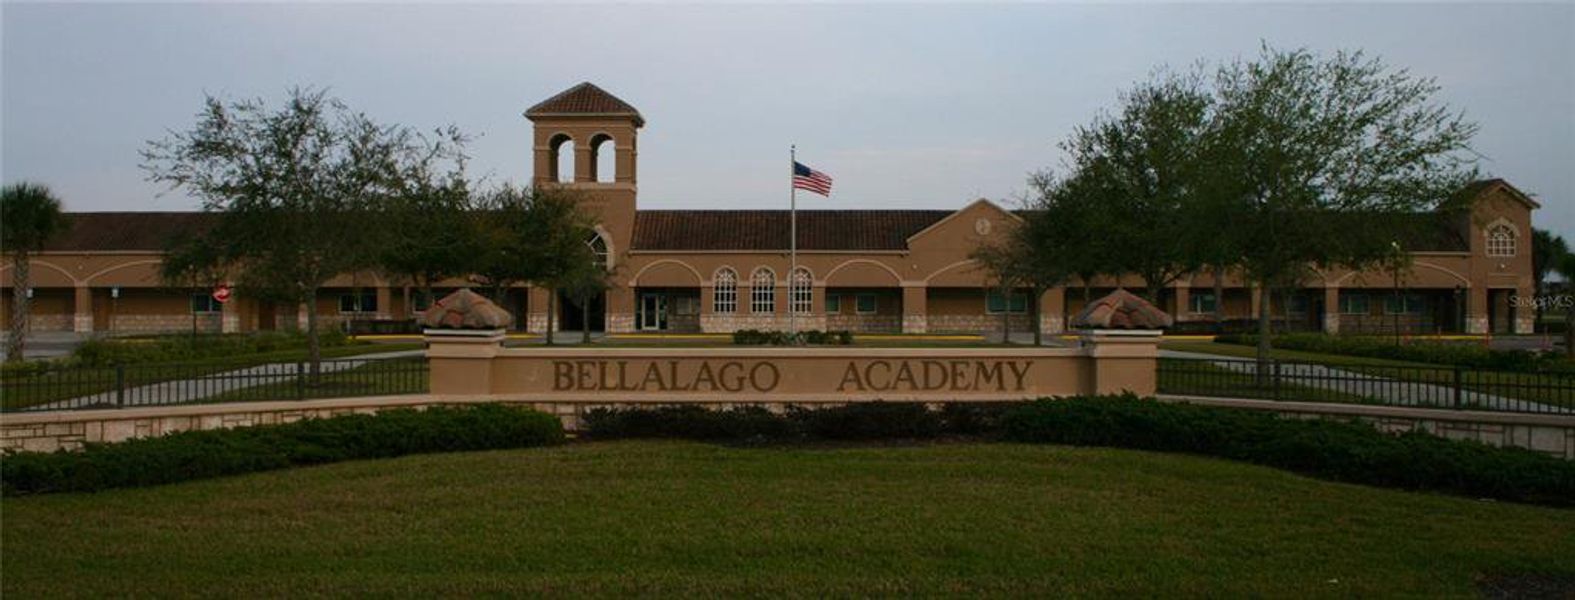 Bellalago Community